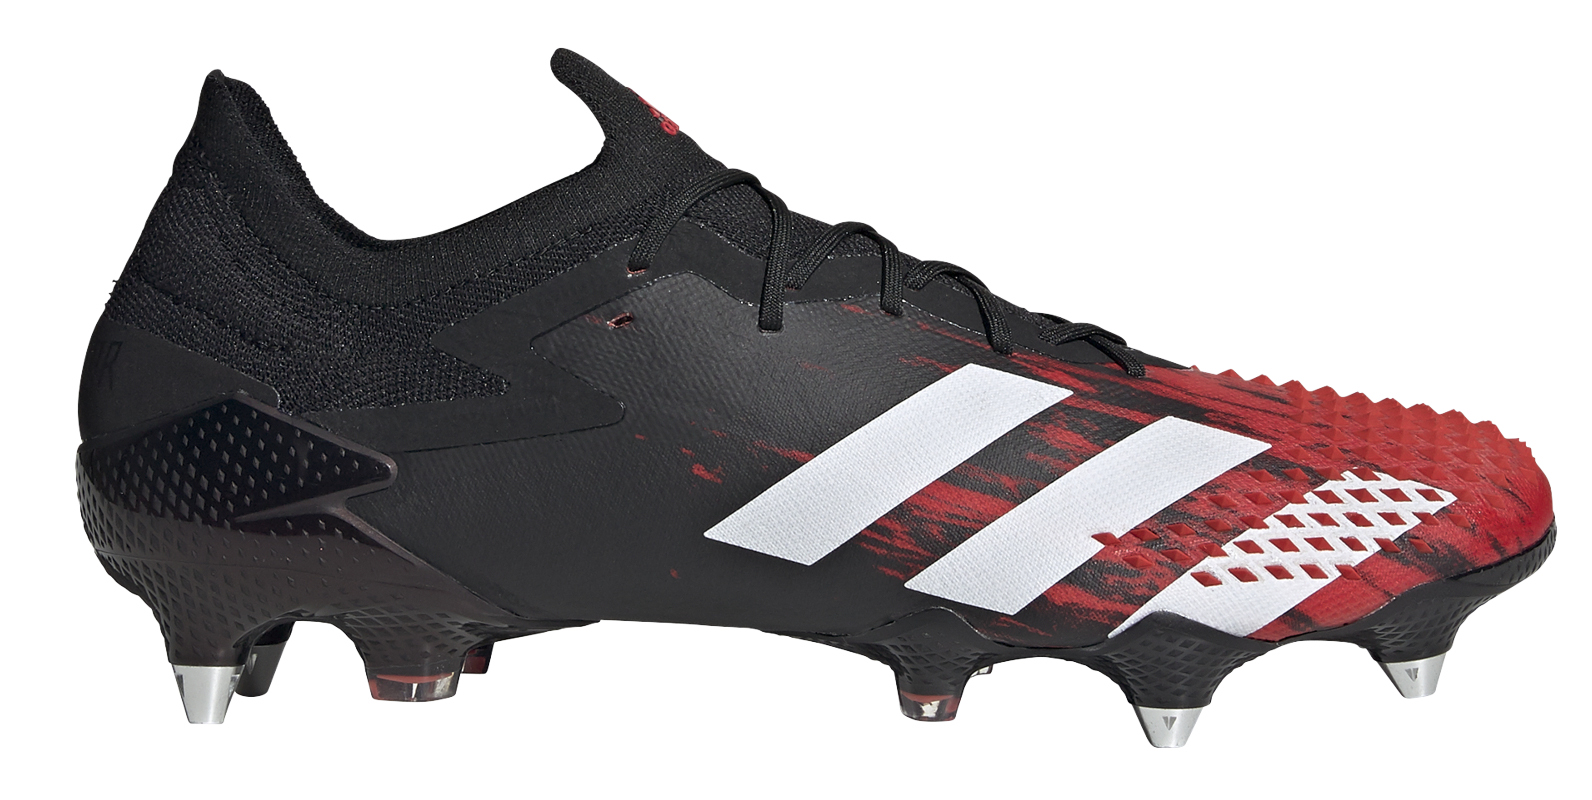 adidas predator sg football boots